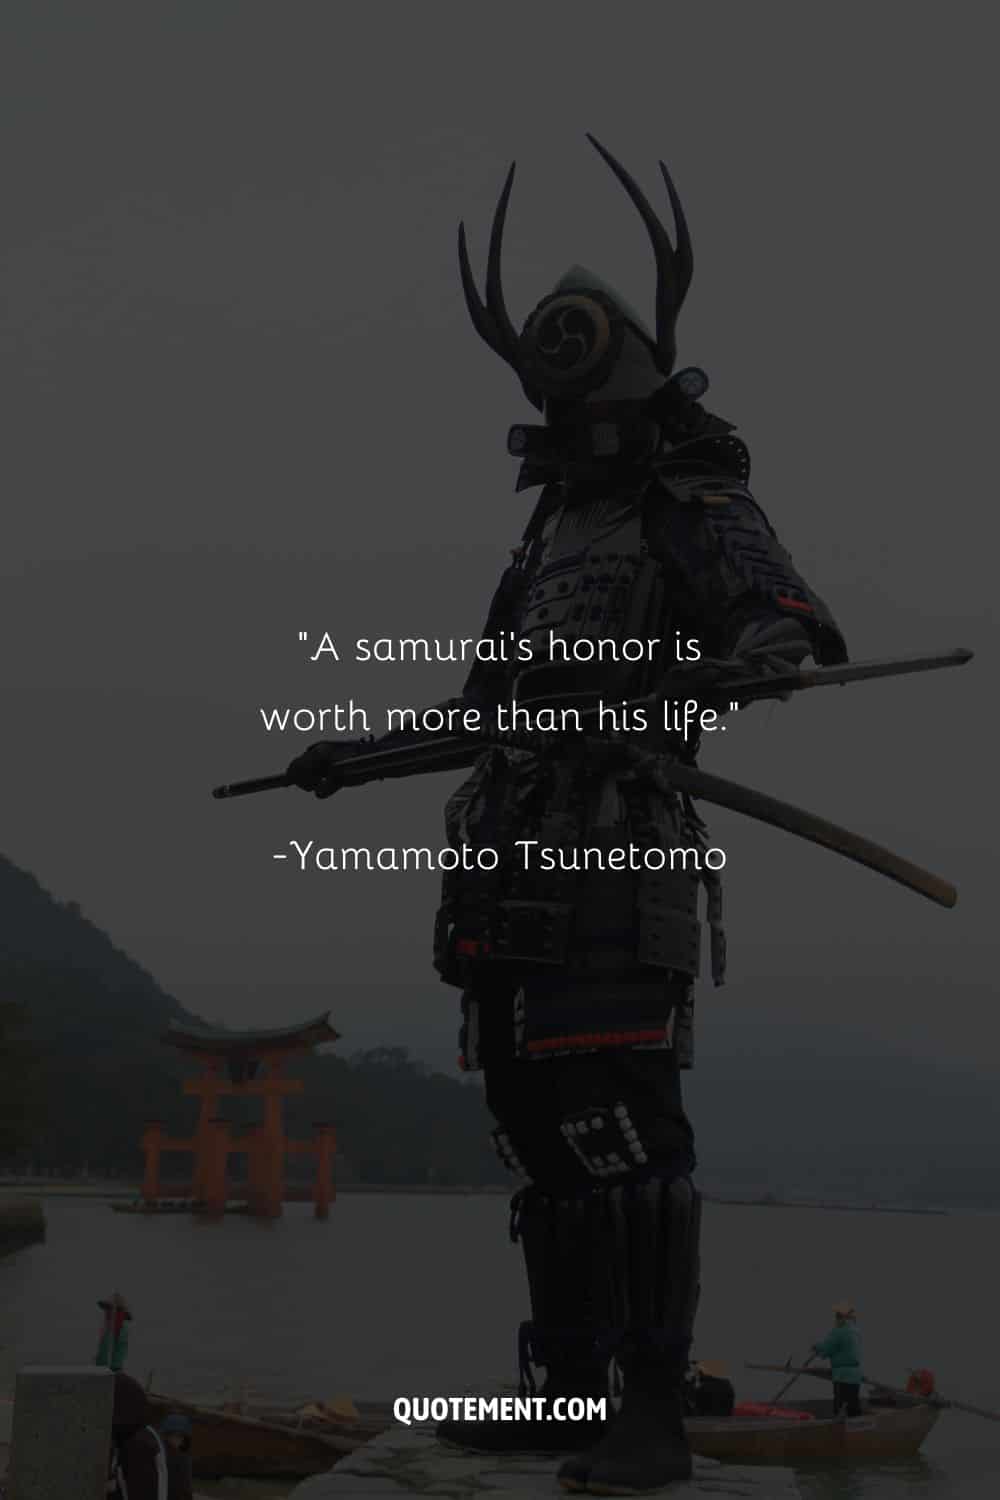 The formidable samurai in black representing japanese warrior quote